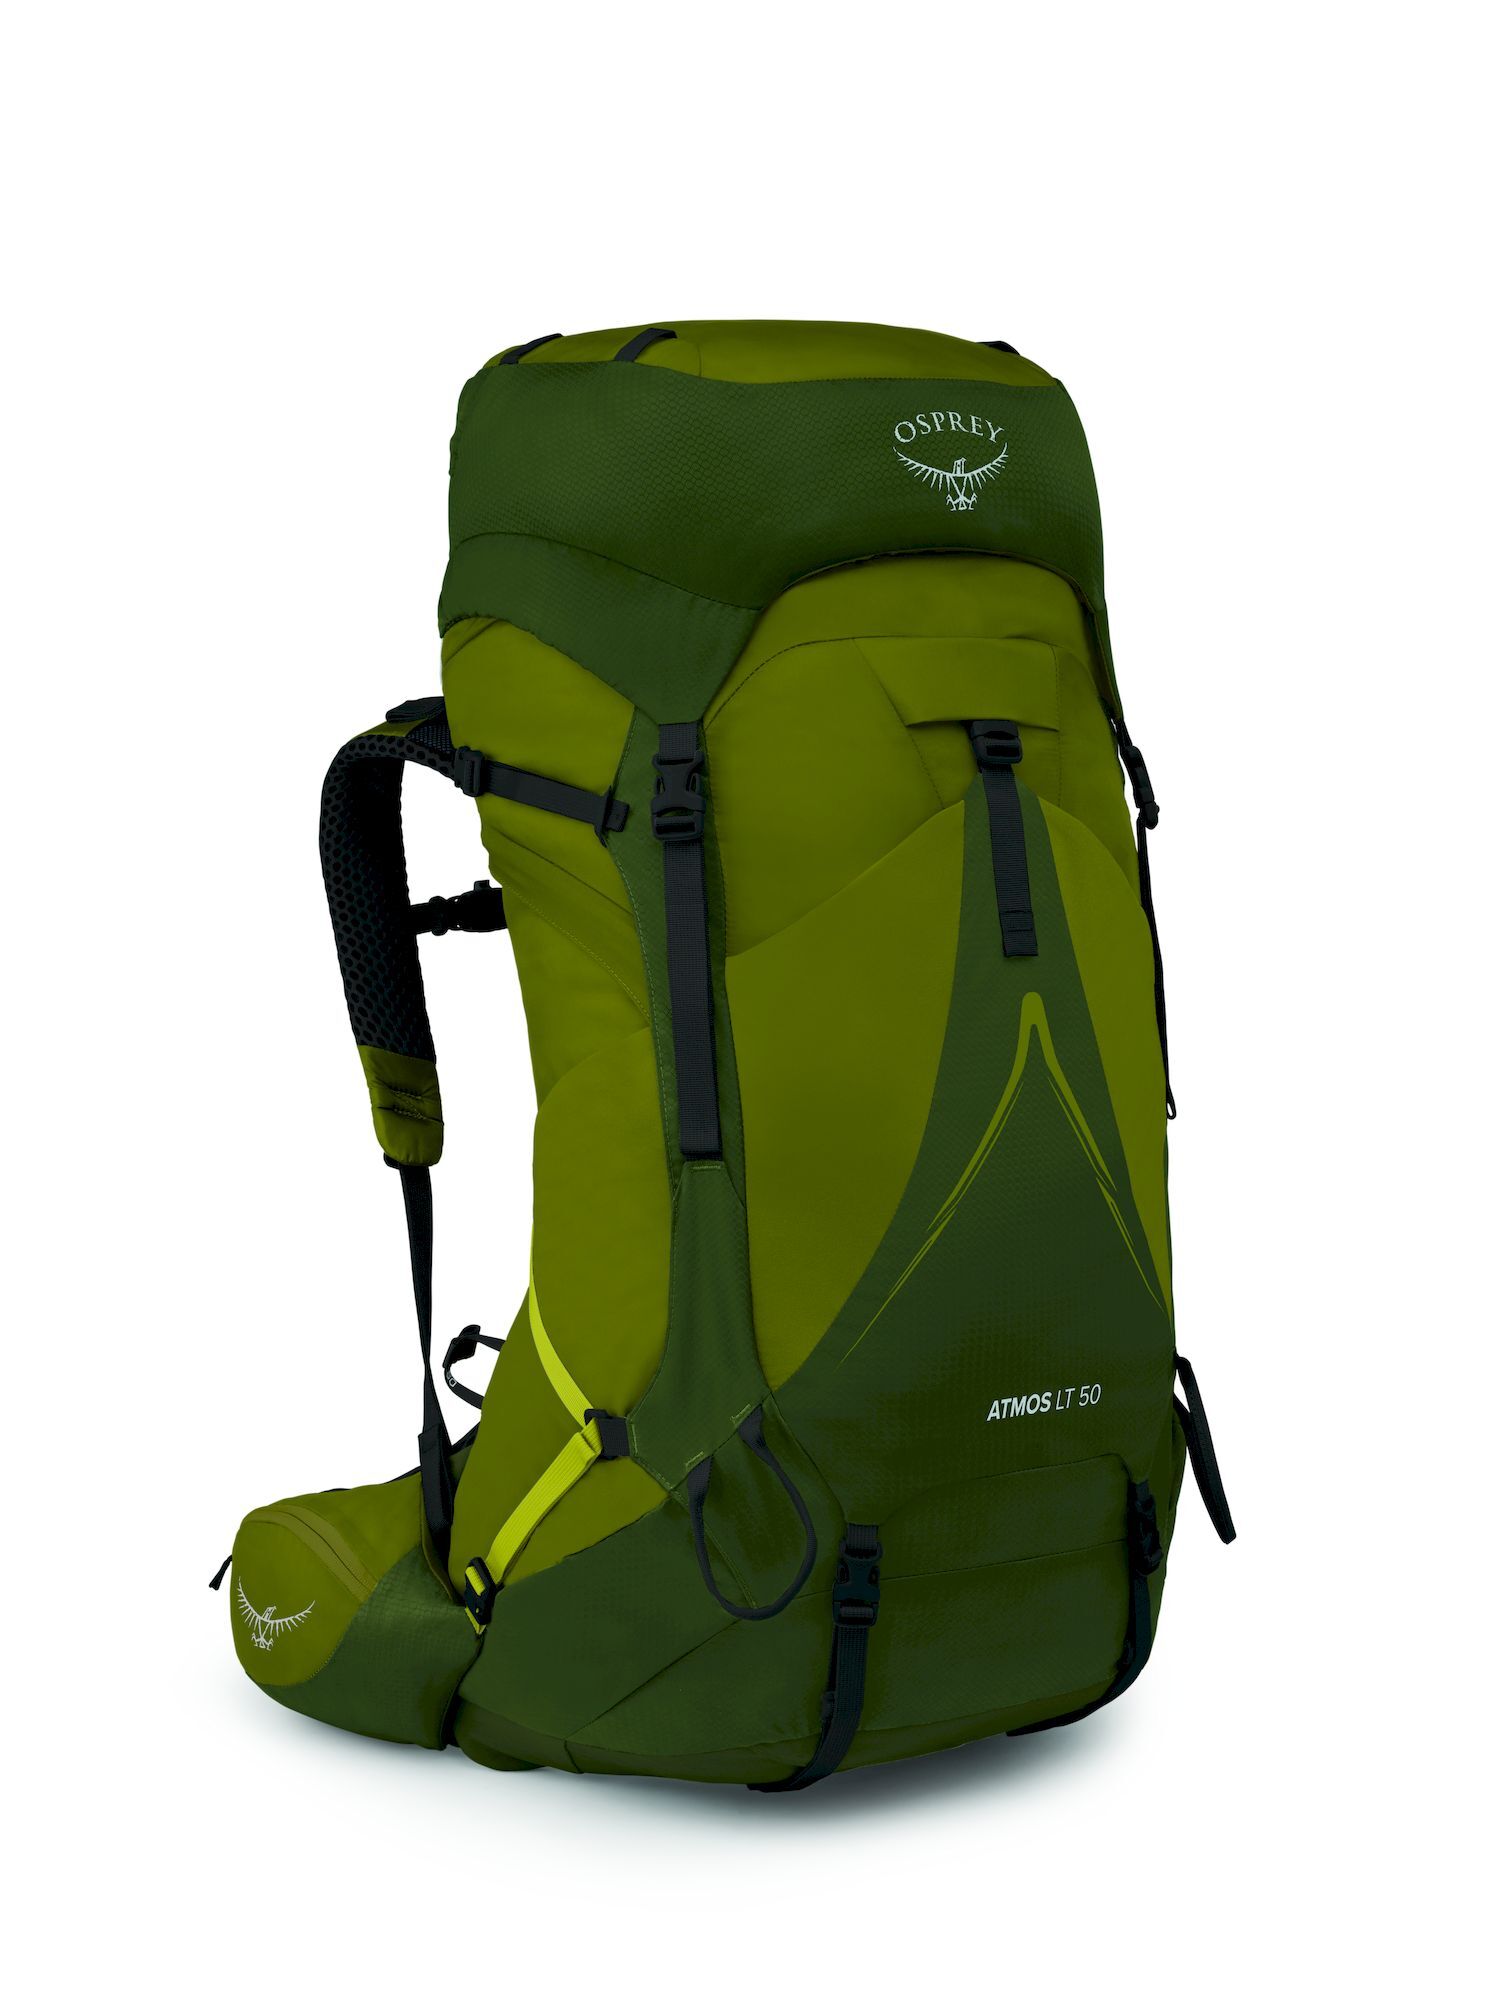 Osprey Atmos AG LT 50 - Hiking backpack - Men's | Hardloop